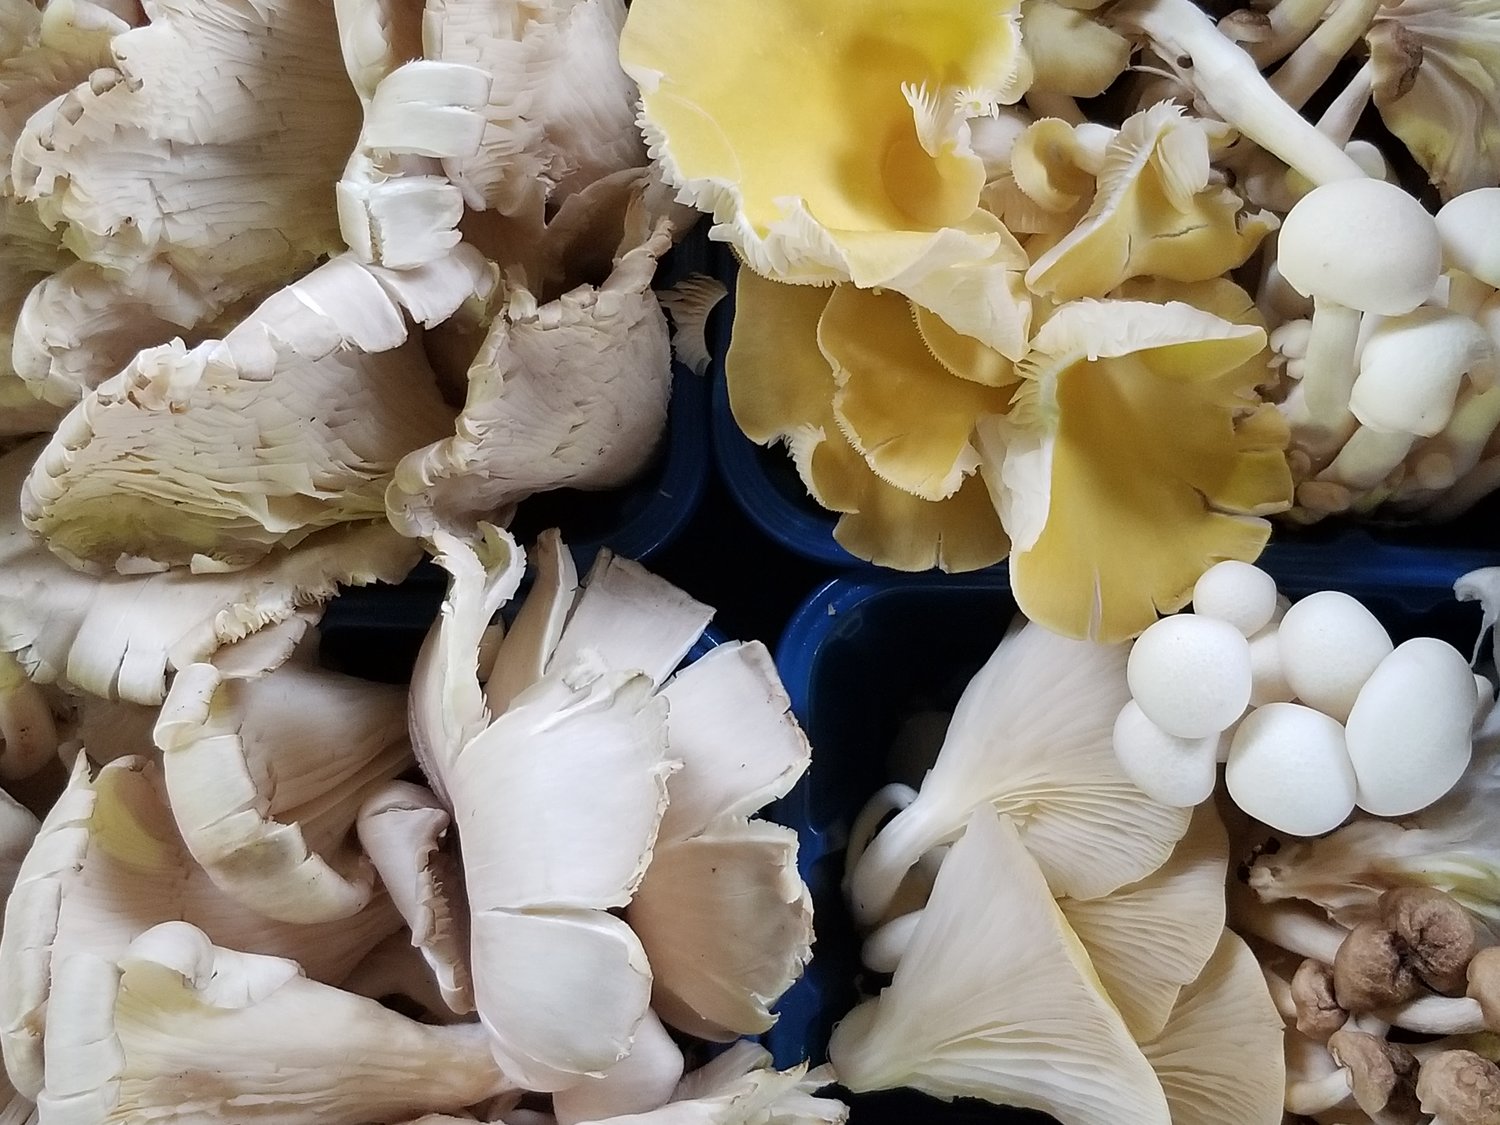 Baltimore's Farmer's Market blew me away - amazing wild mushrooms